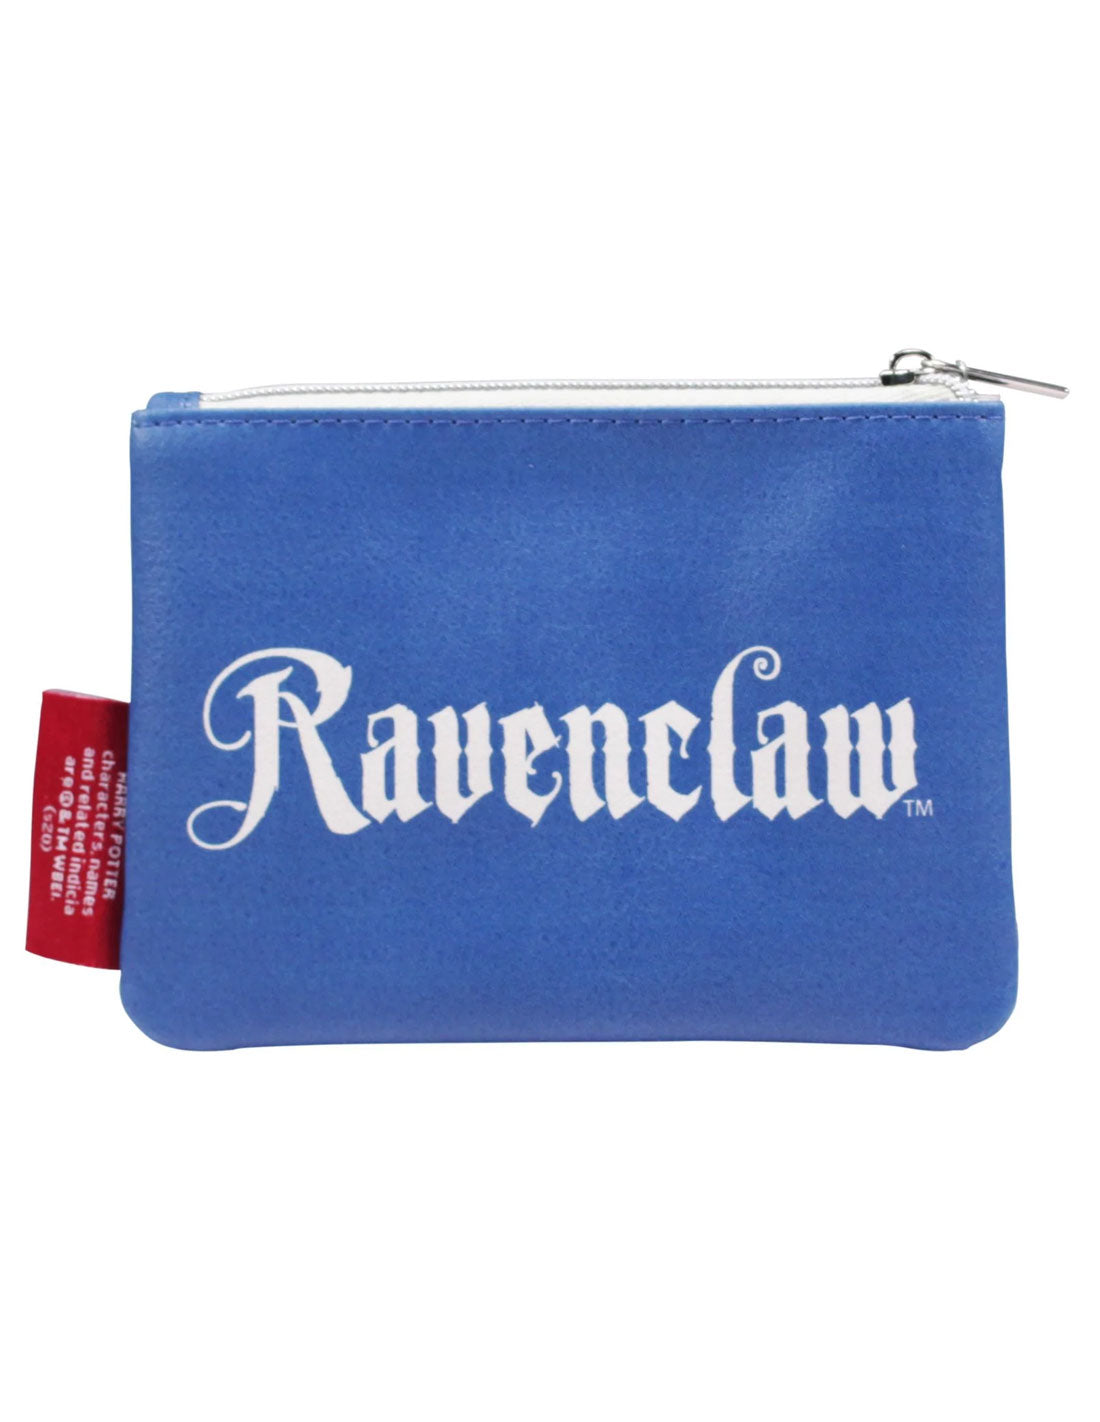 Harry Potter purse - Ravenclaw